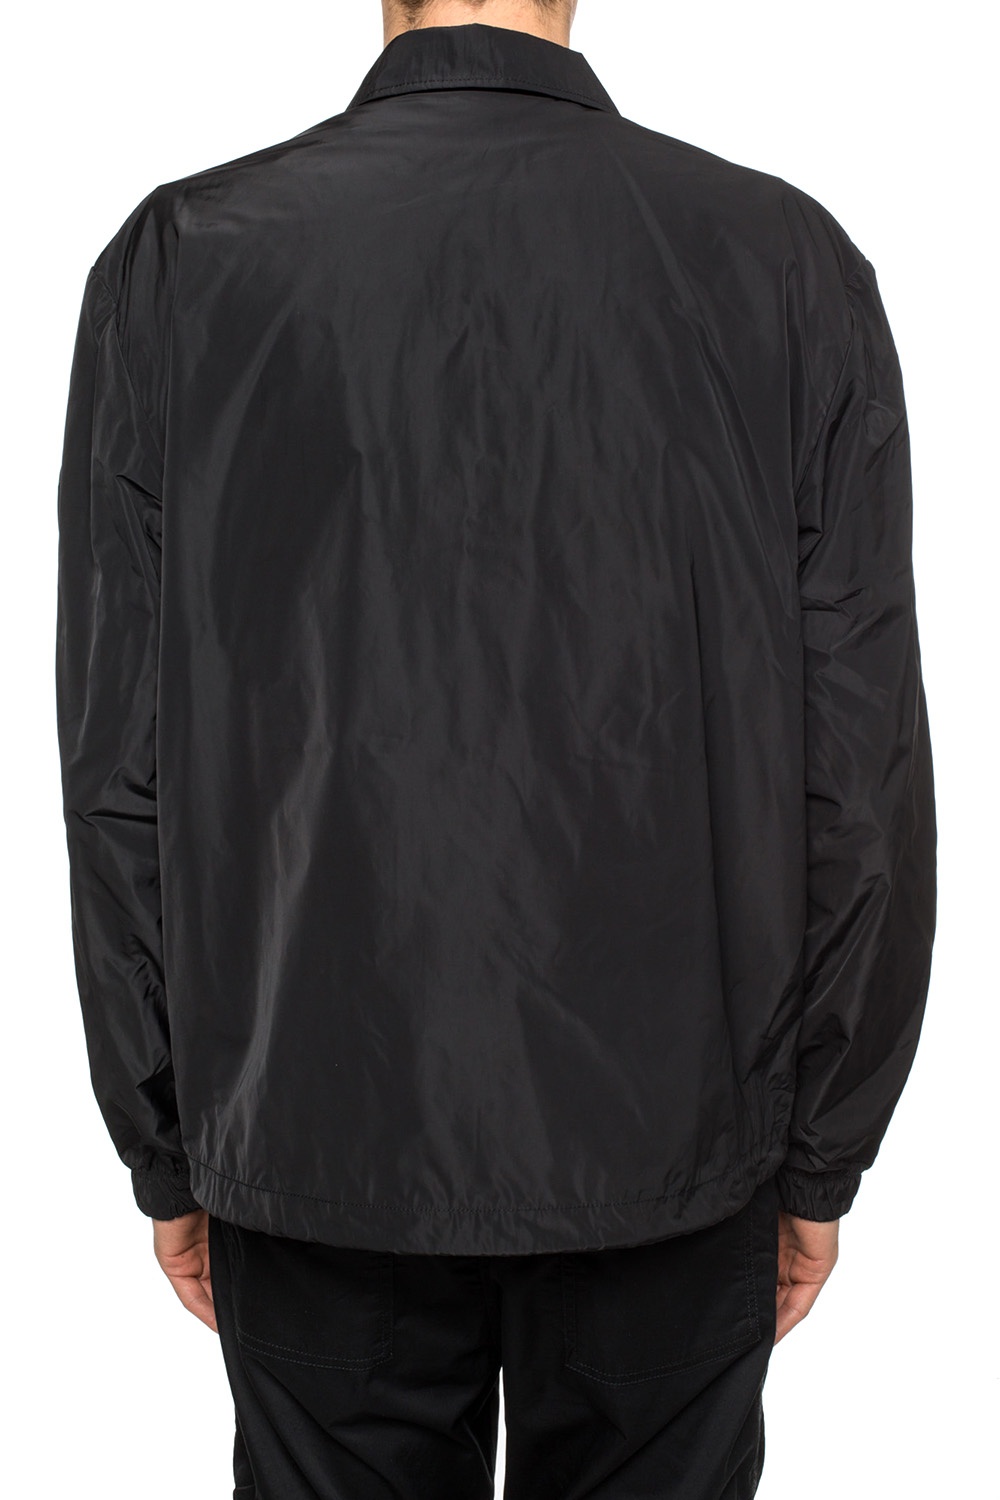 Diesel Rain jacket | Men's Clothing | Vitkac